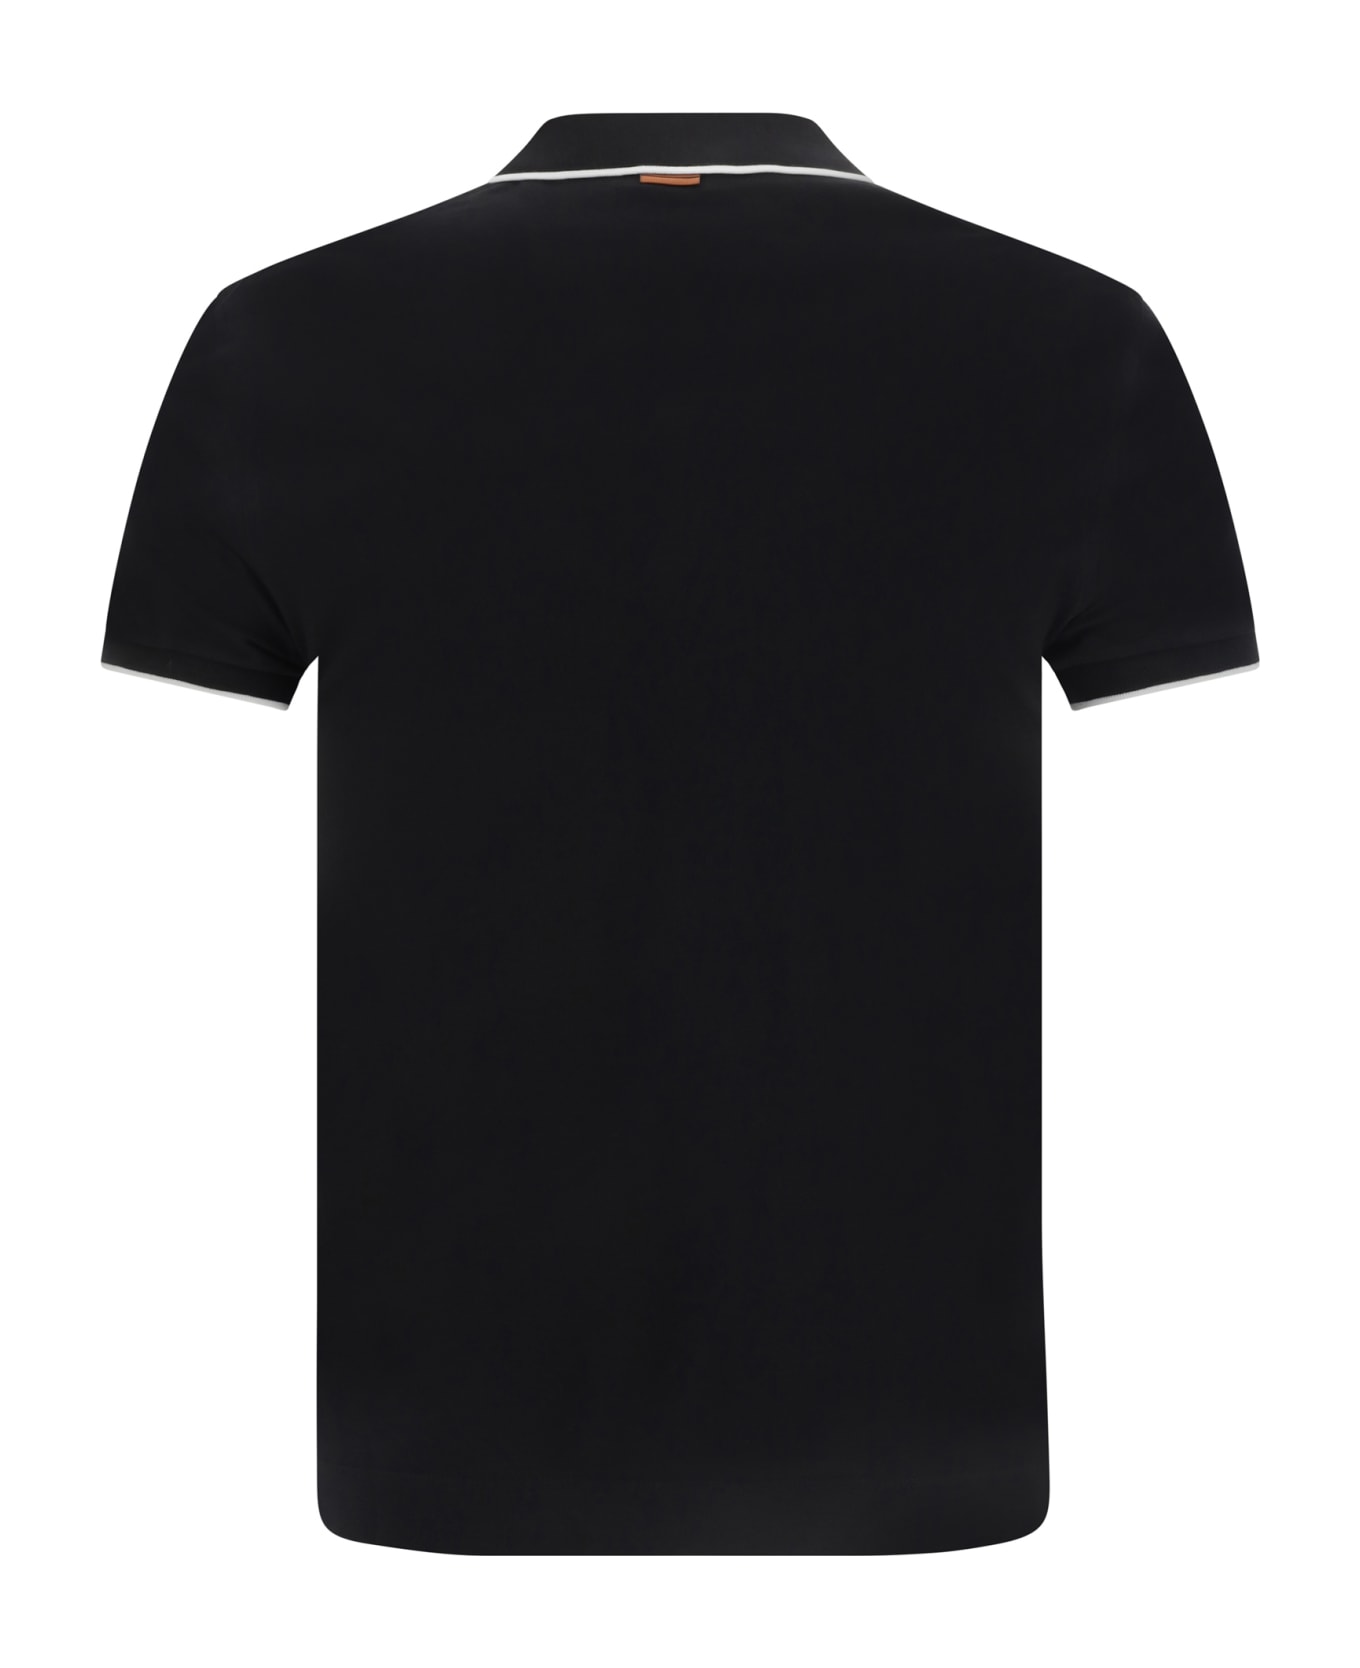 Zegna Polo Shirt - Black